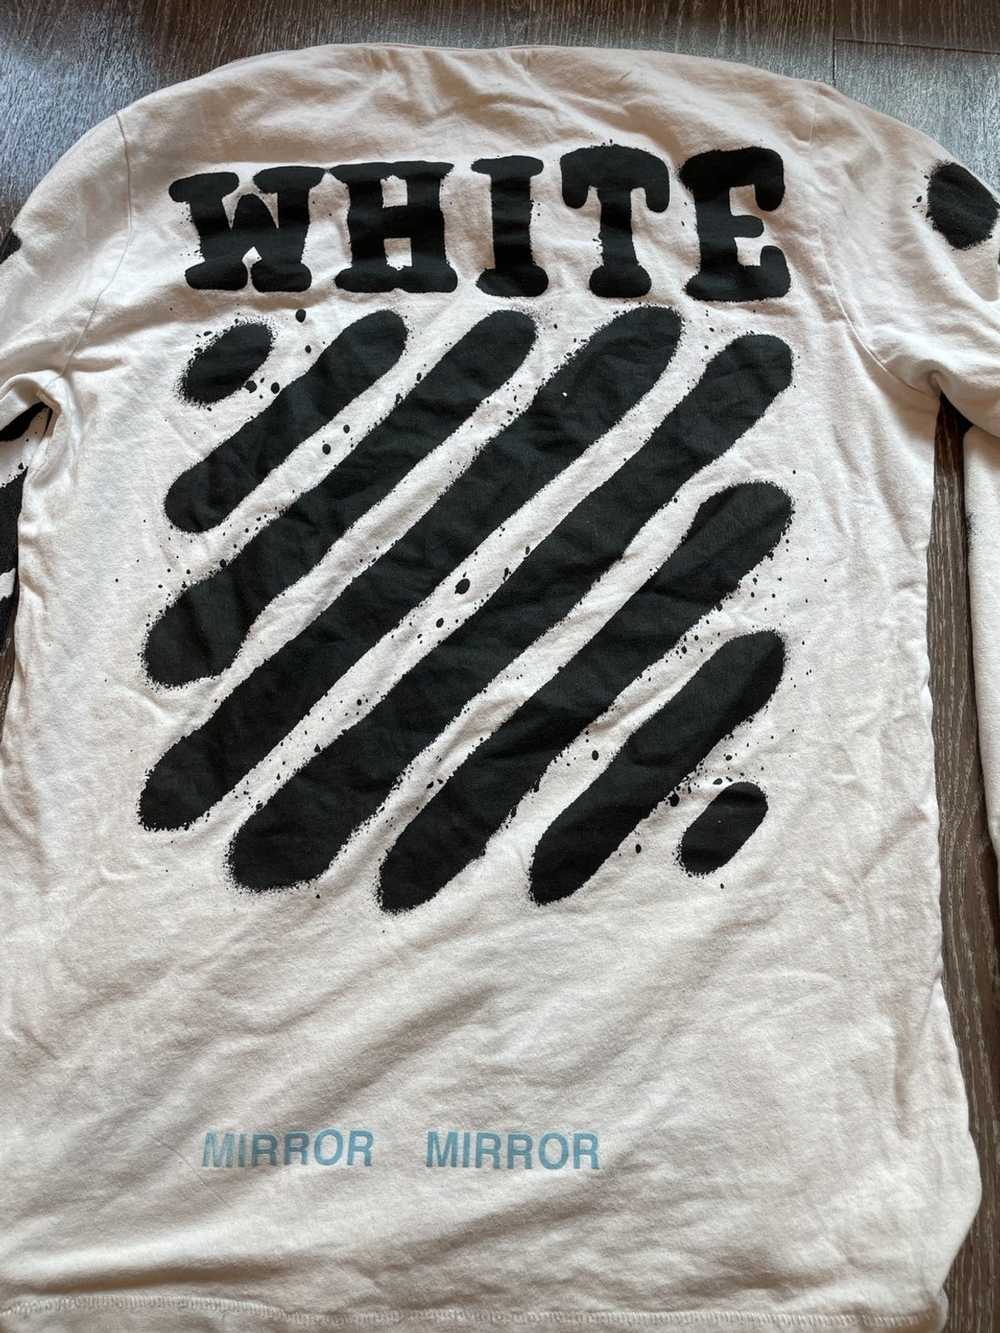 Off-White c/o VIRGIL ABLOH Hoodie 2013 Mirror Mirror MAIN LABEL White  Stripe!